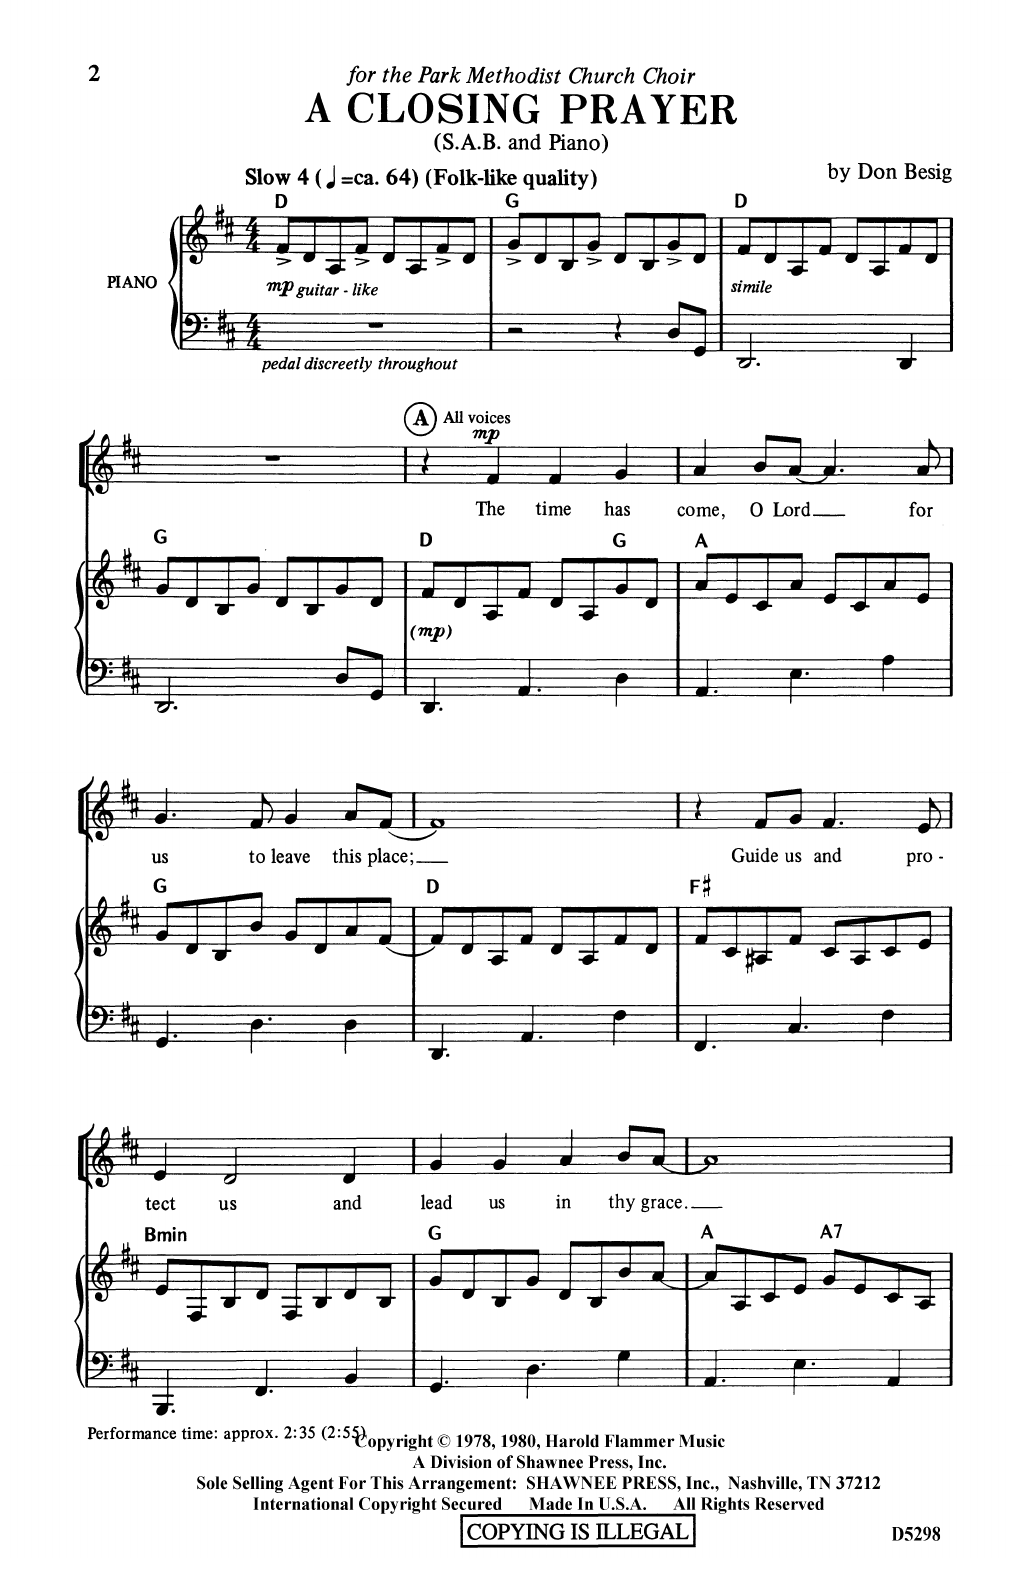 Don Besig A Closing Prayer Sheet Music Notes & Chords for 2-Part Choir - Download or Print PDF